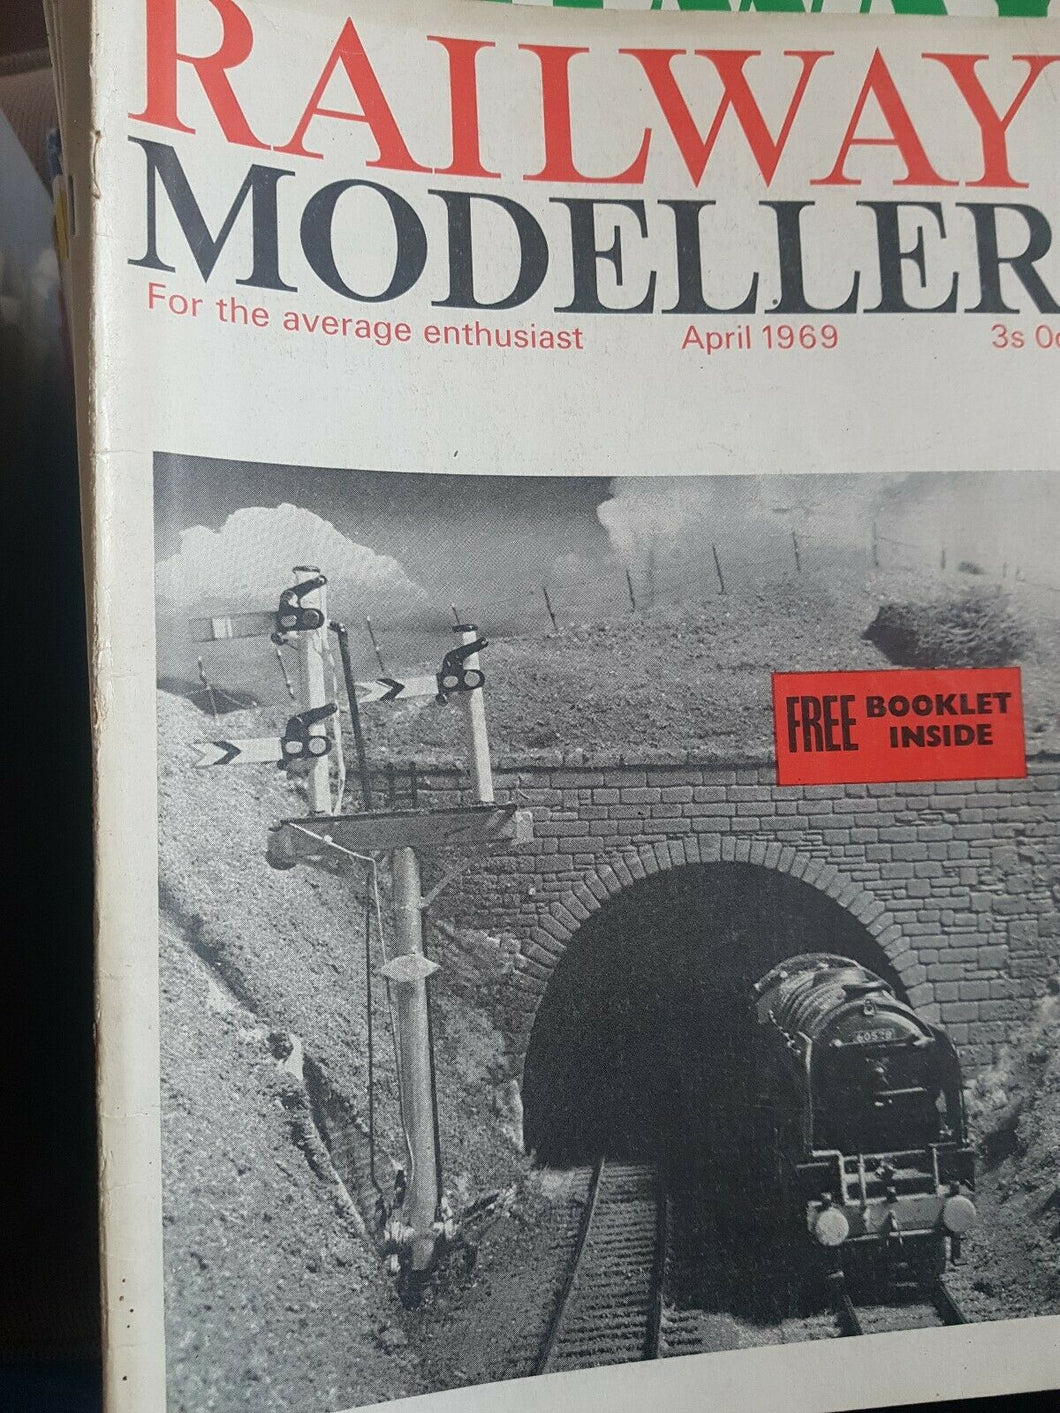 Railway modeller magazine April 1969